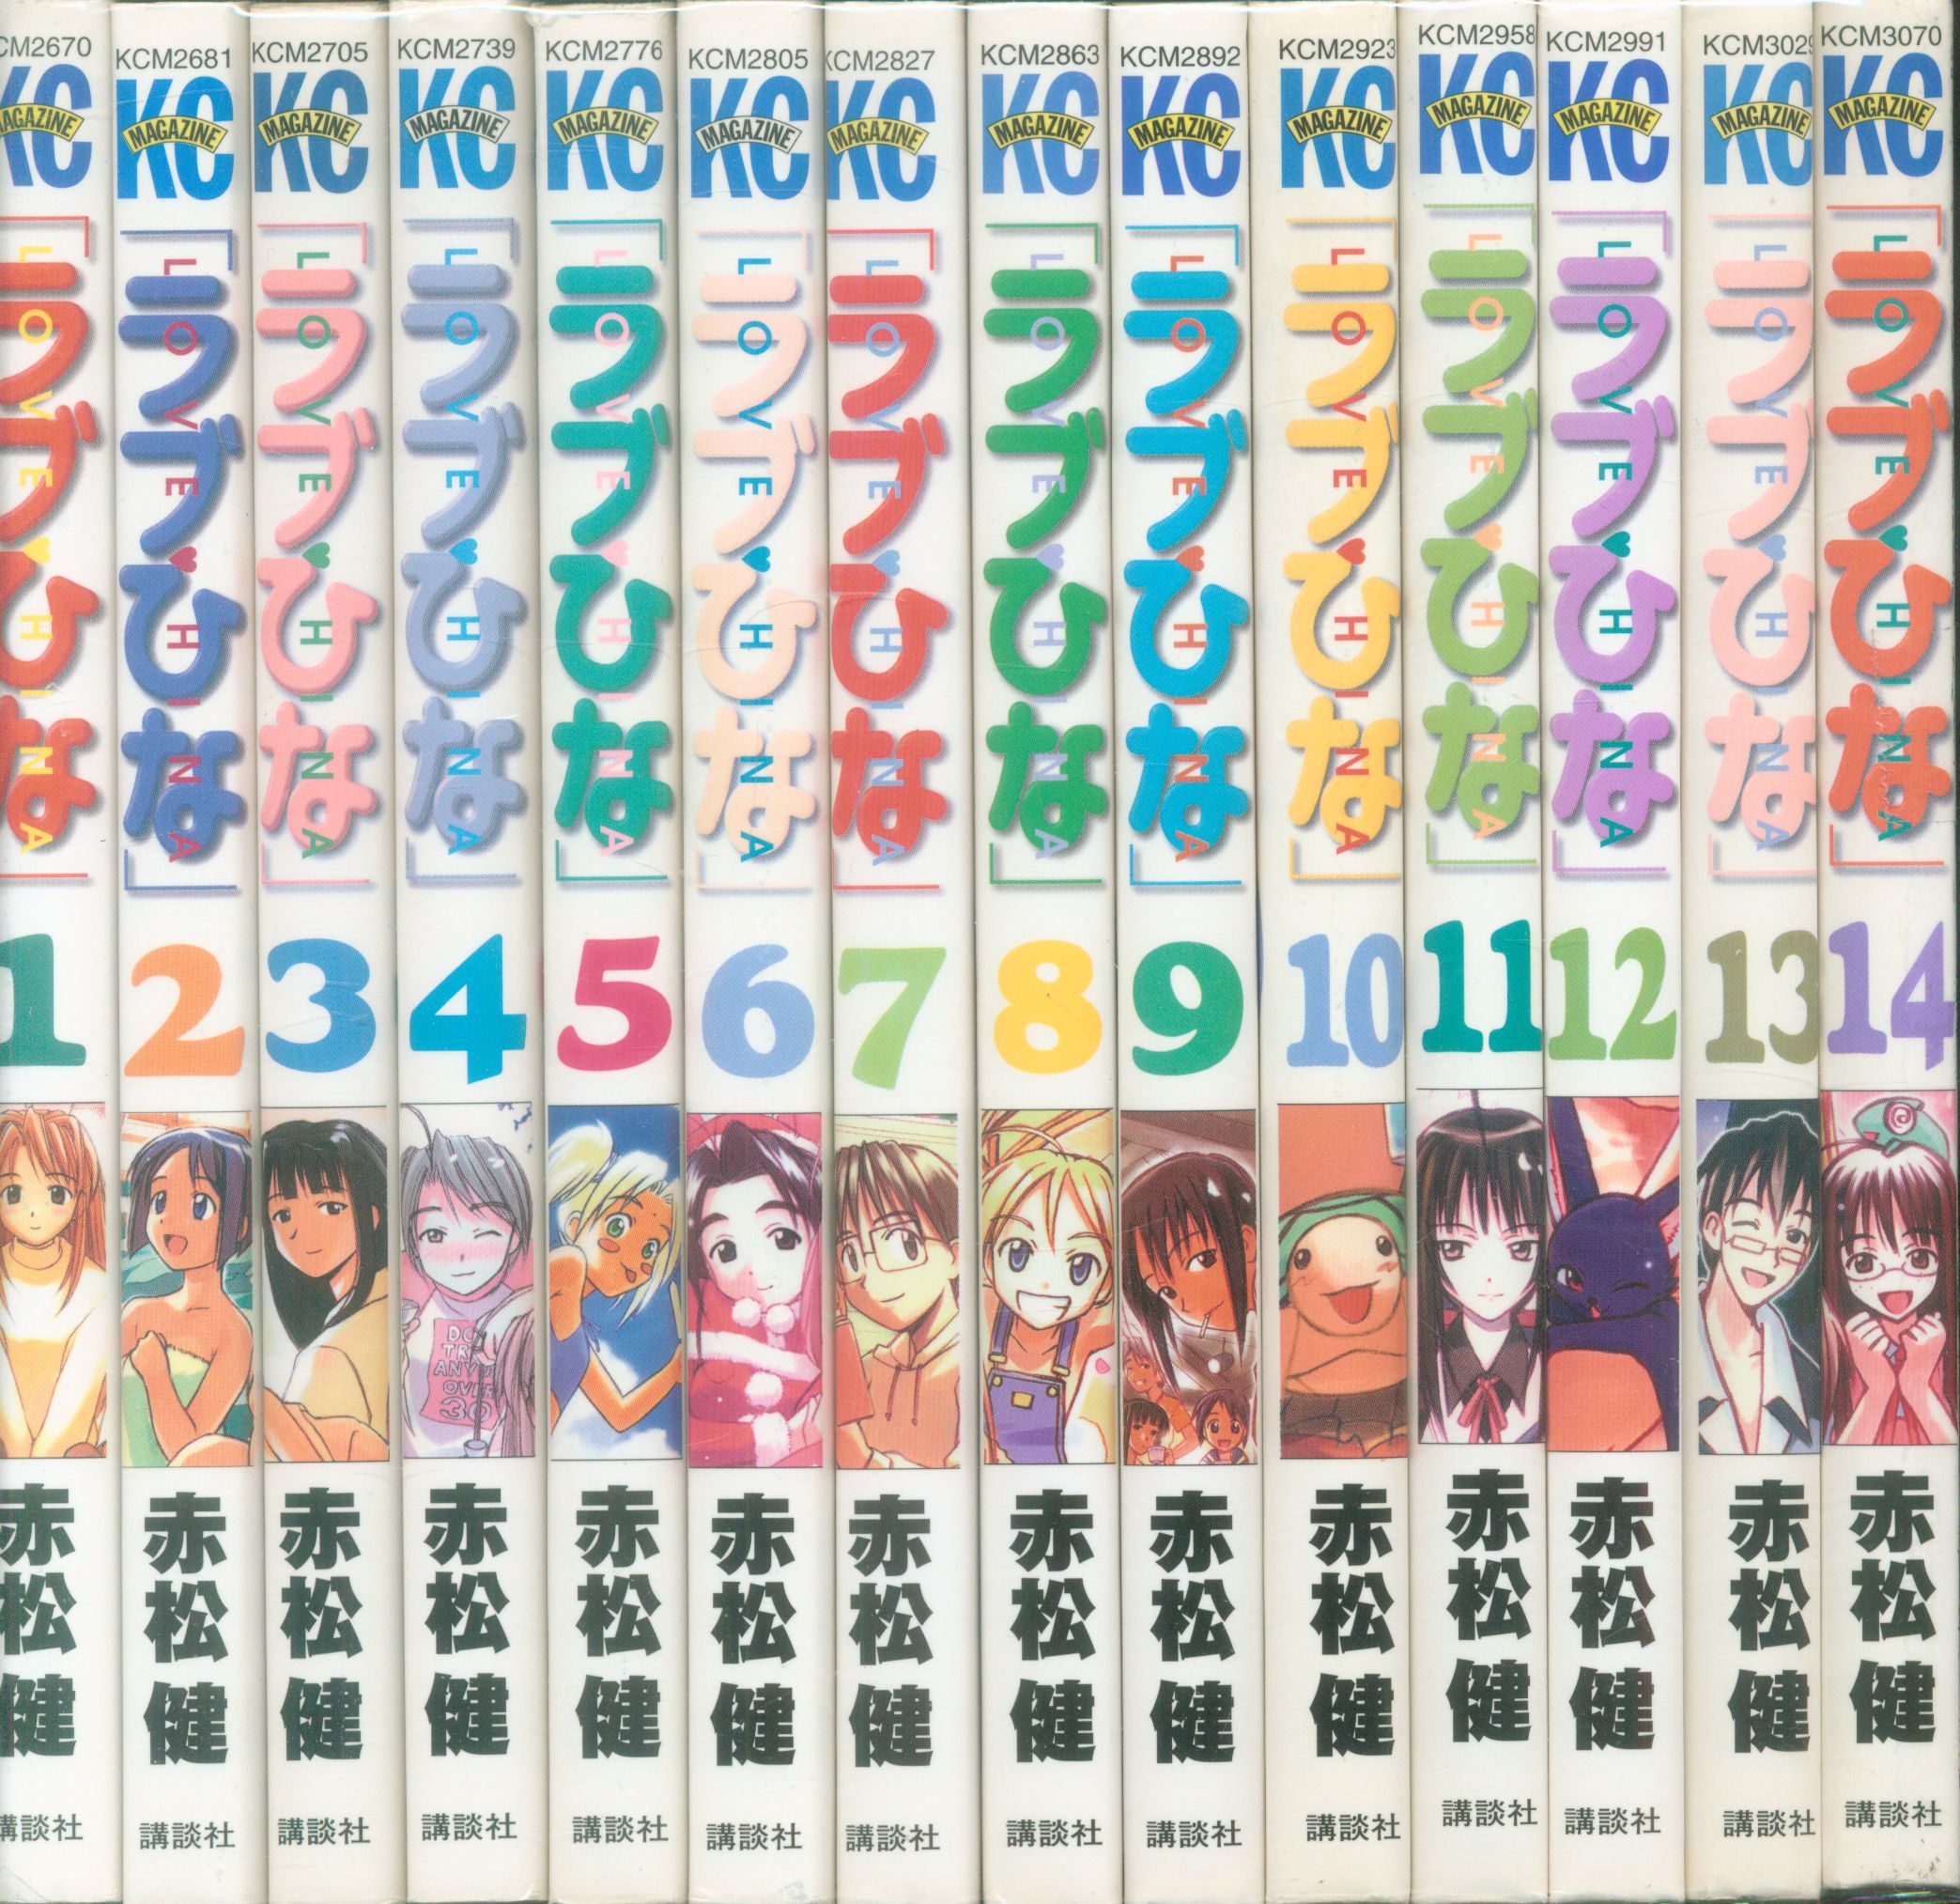 Kodansha Kodansha Comics Ken Akamatsu Love Hina Complete Volume Set Mandarake Online Shop